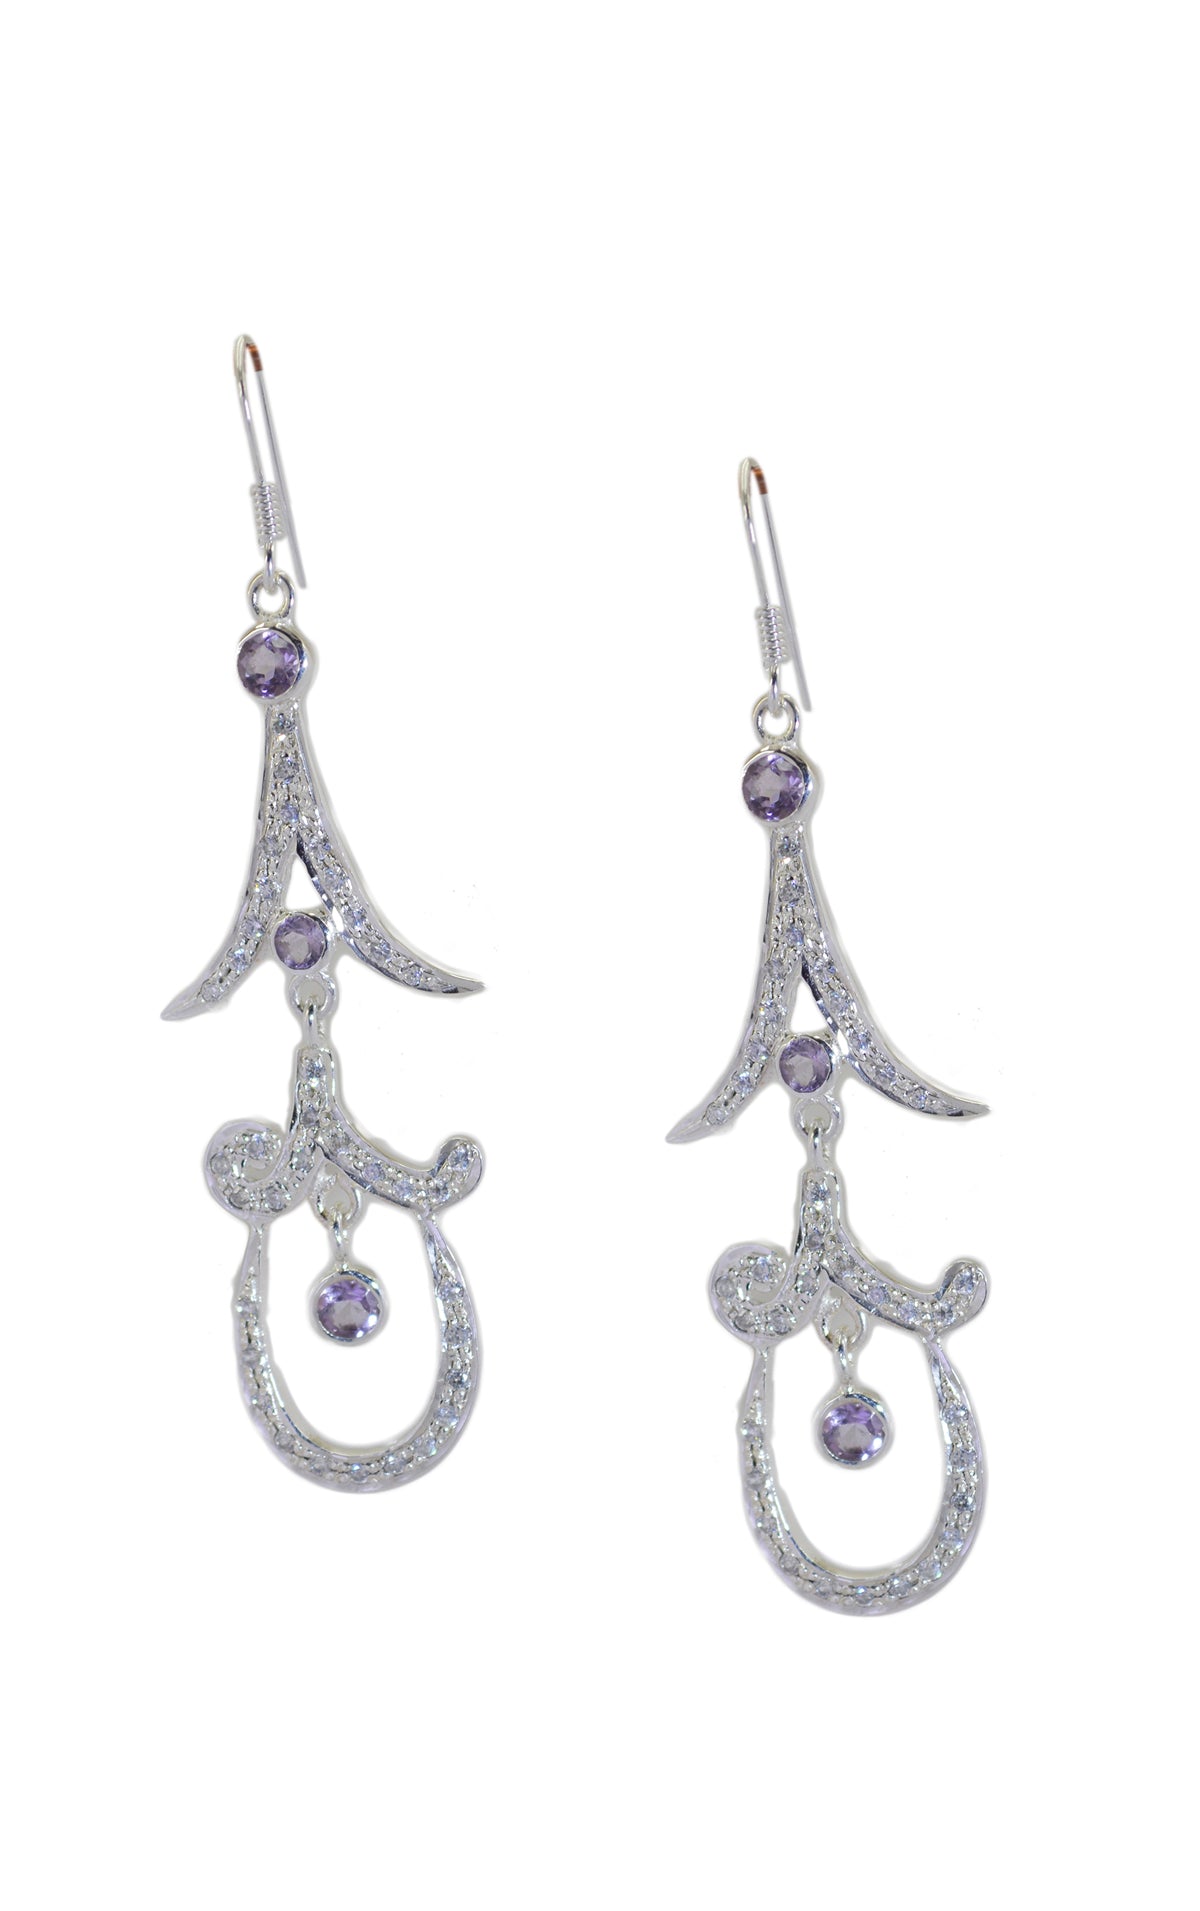 Riyo Good Gemstones round Faceted Purple Amethyst Silver Earrings gift for teacher's day